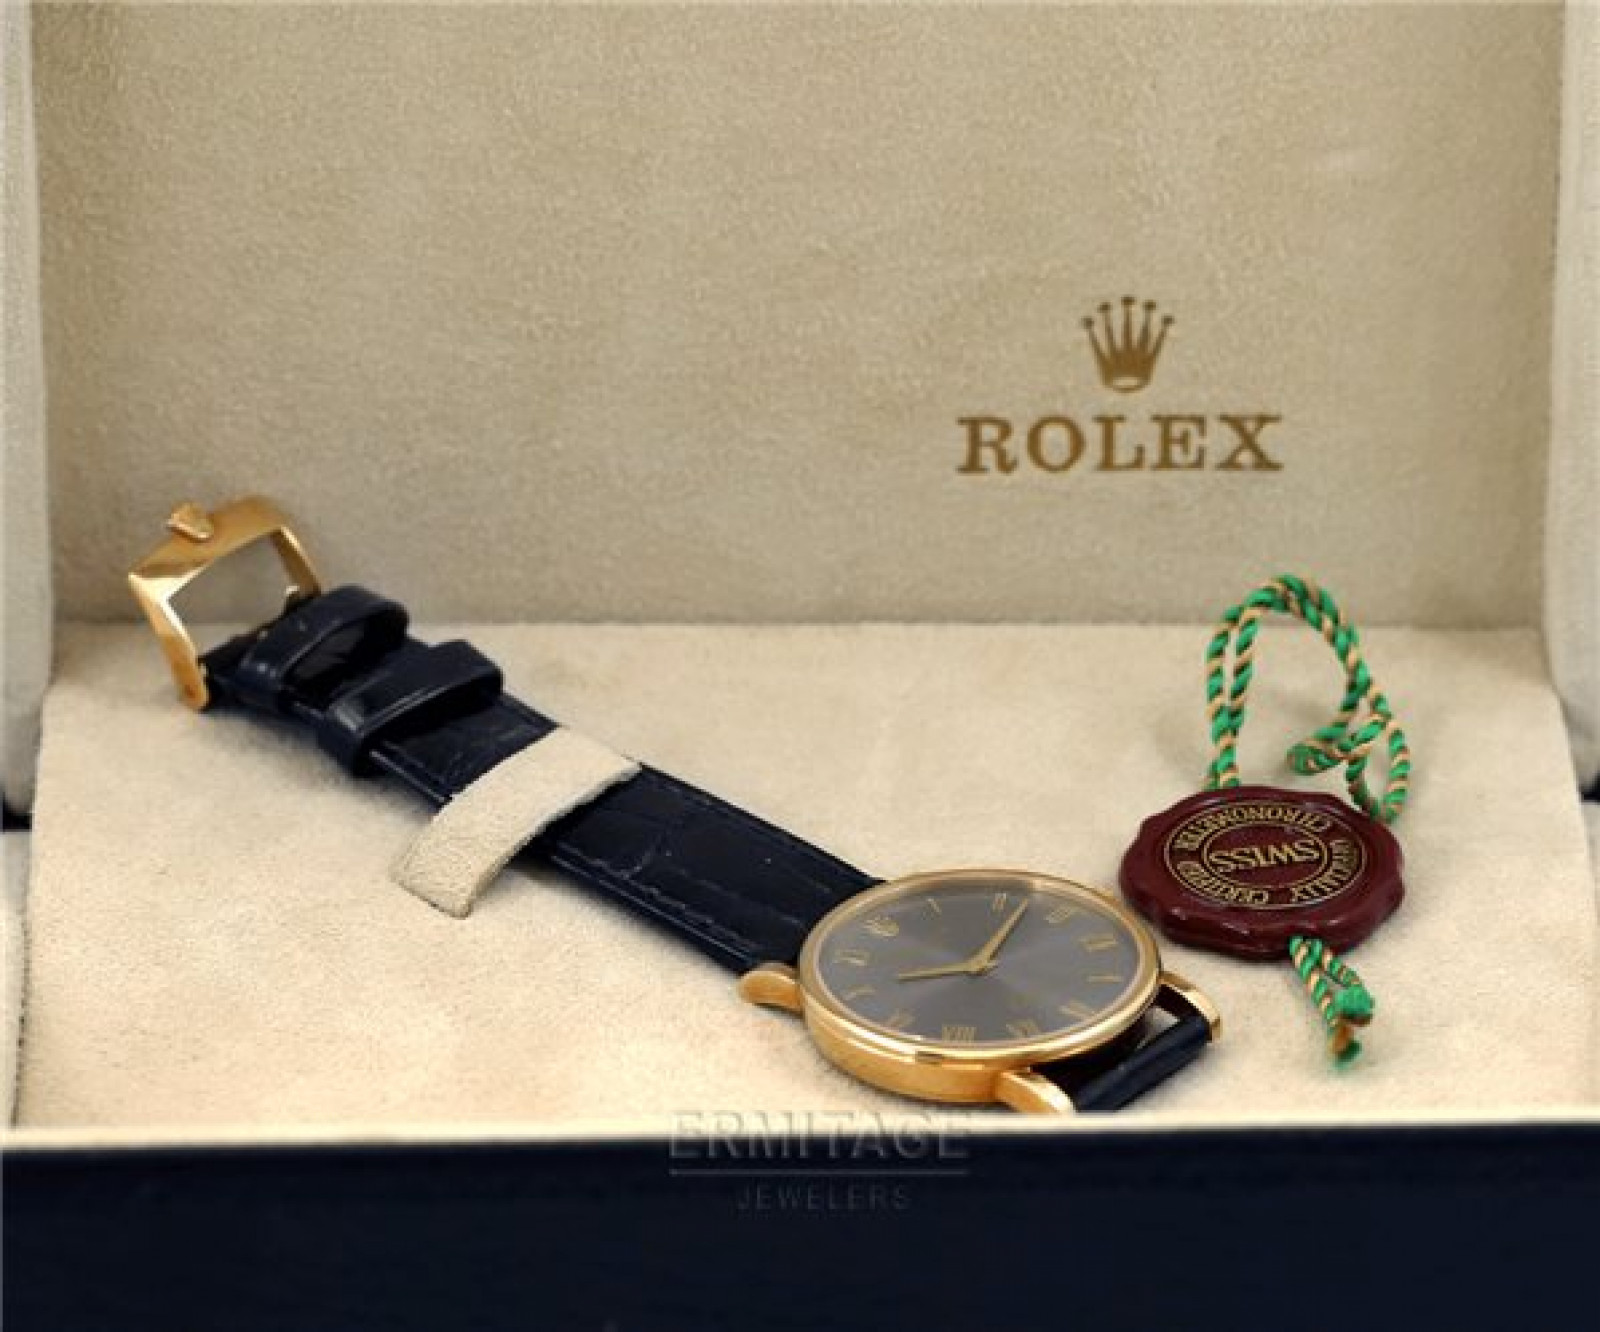 Rolex Cellini 5115 Gold Year 2002